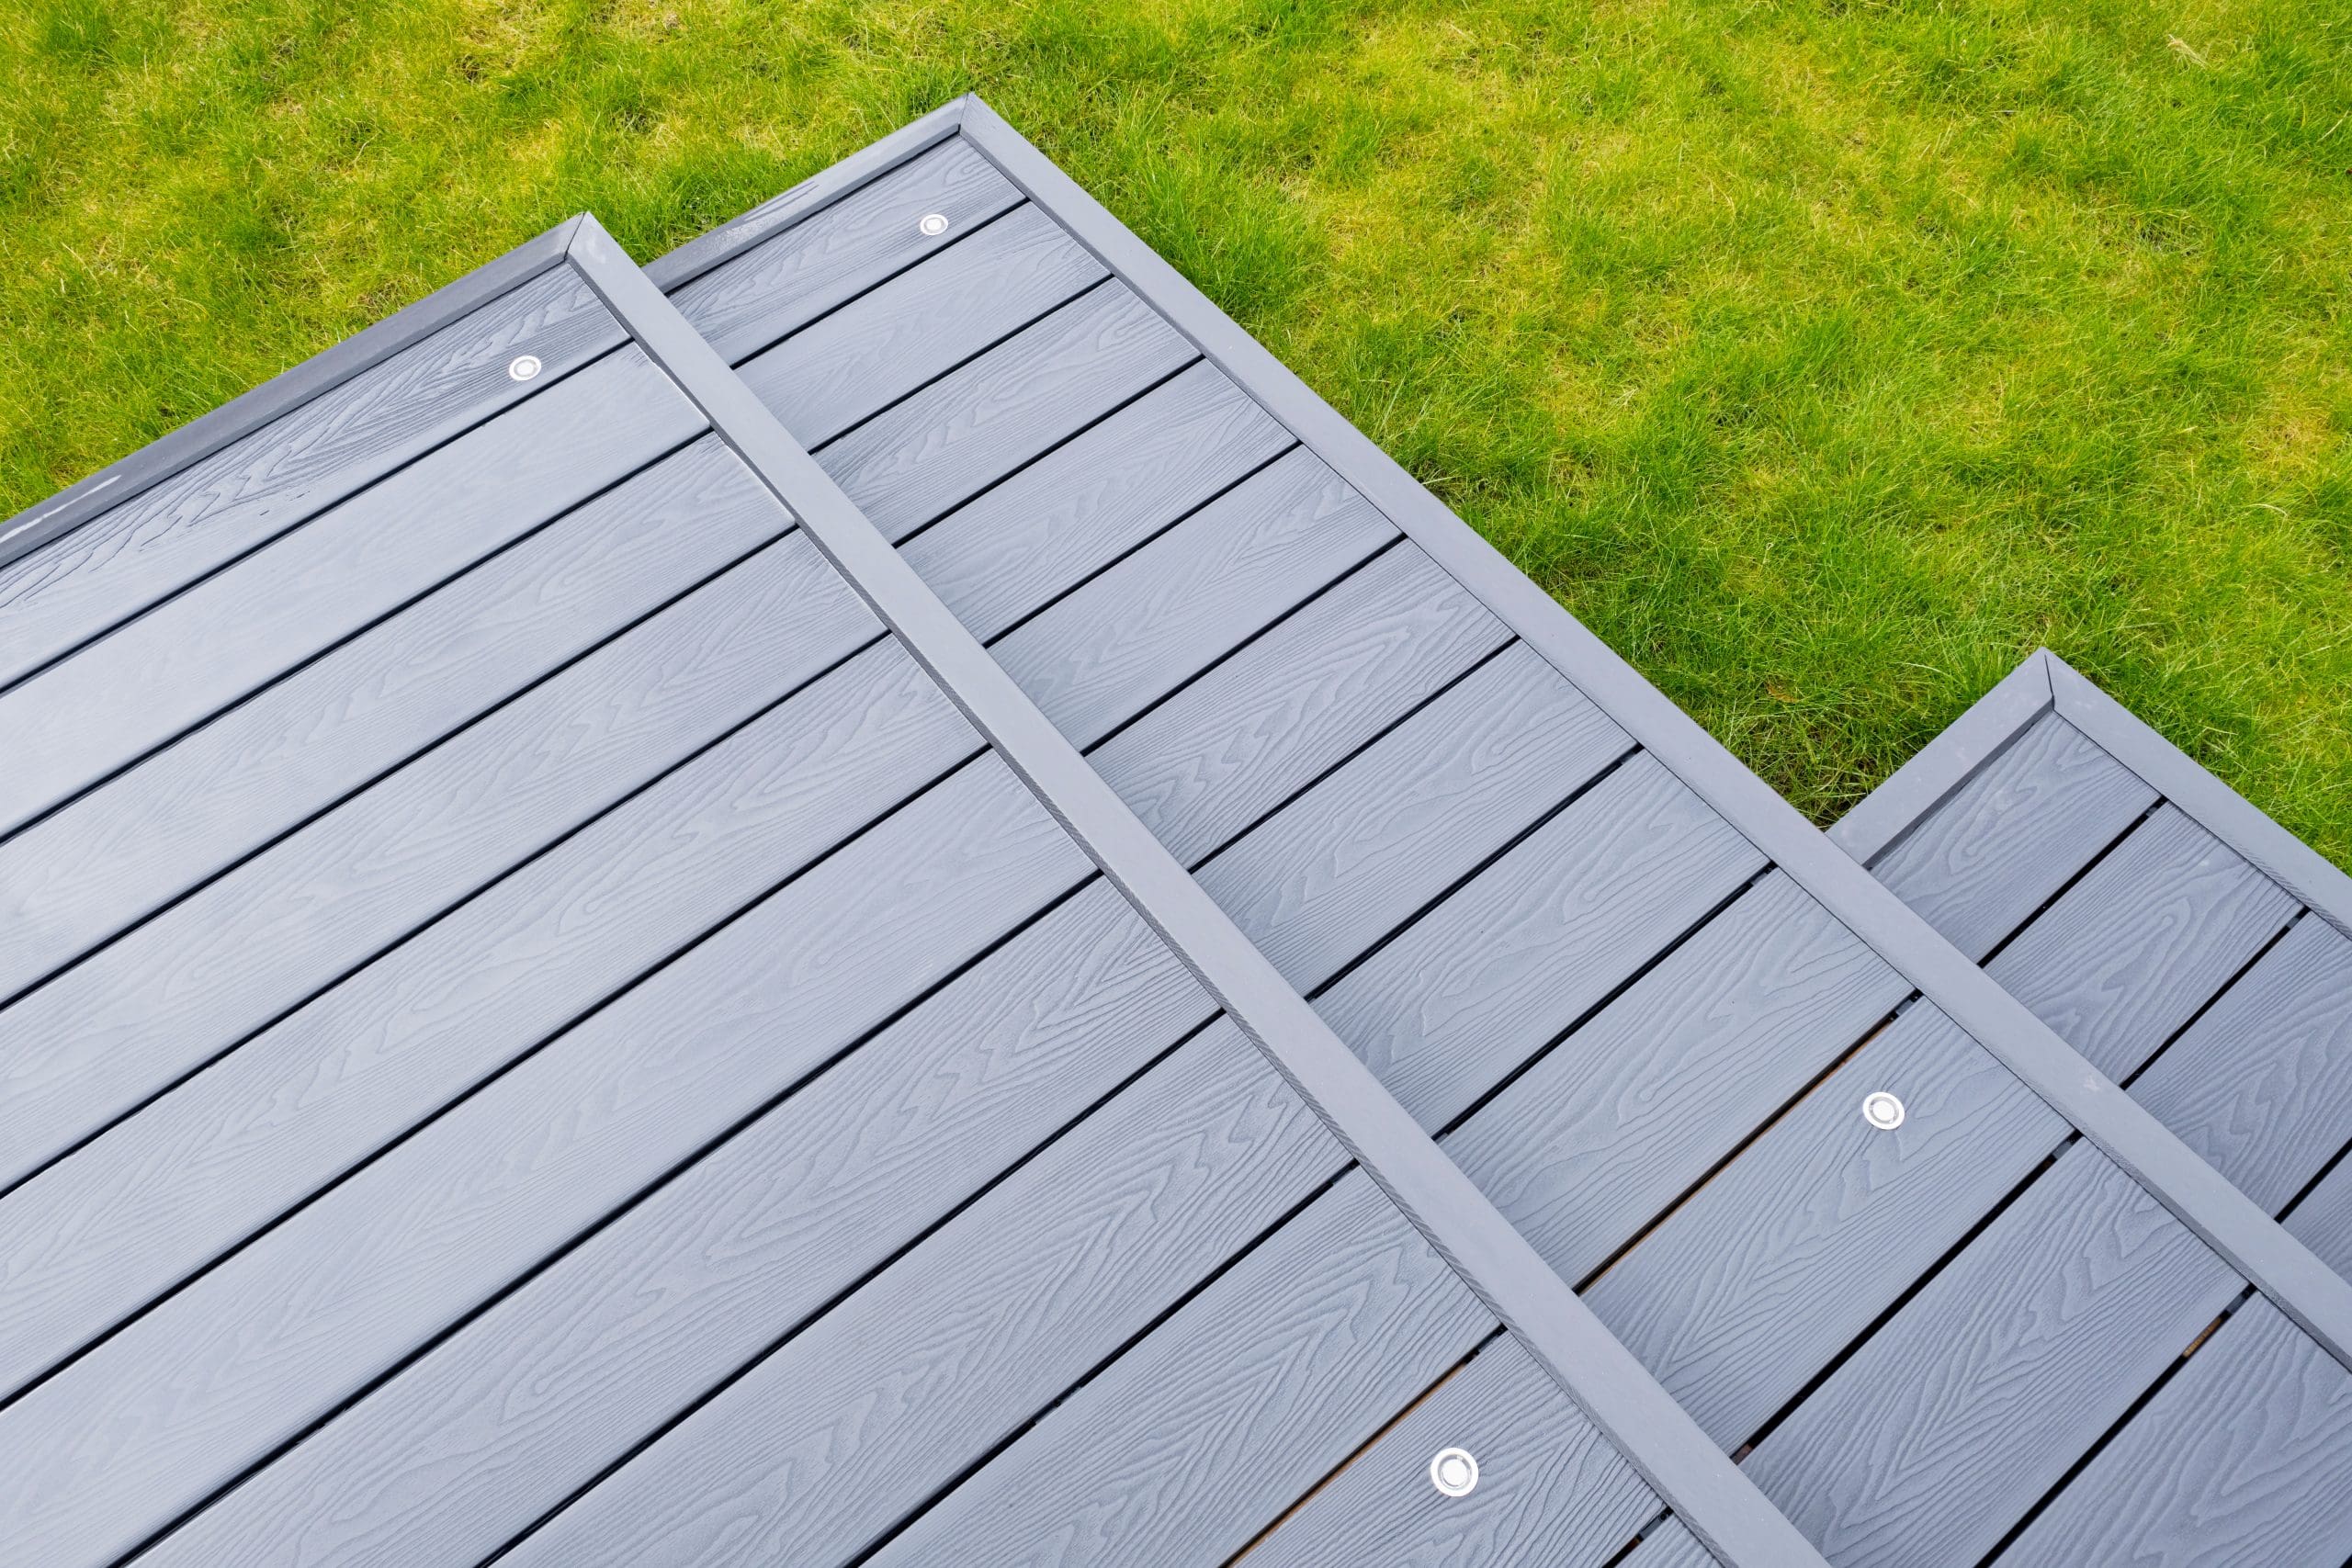 Looking to enhance your outdoor living space? Blackrock Decks specializes in building custom decks in Sunset, Utah.